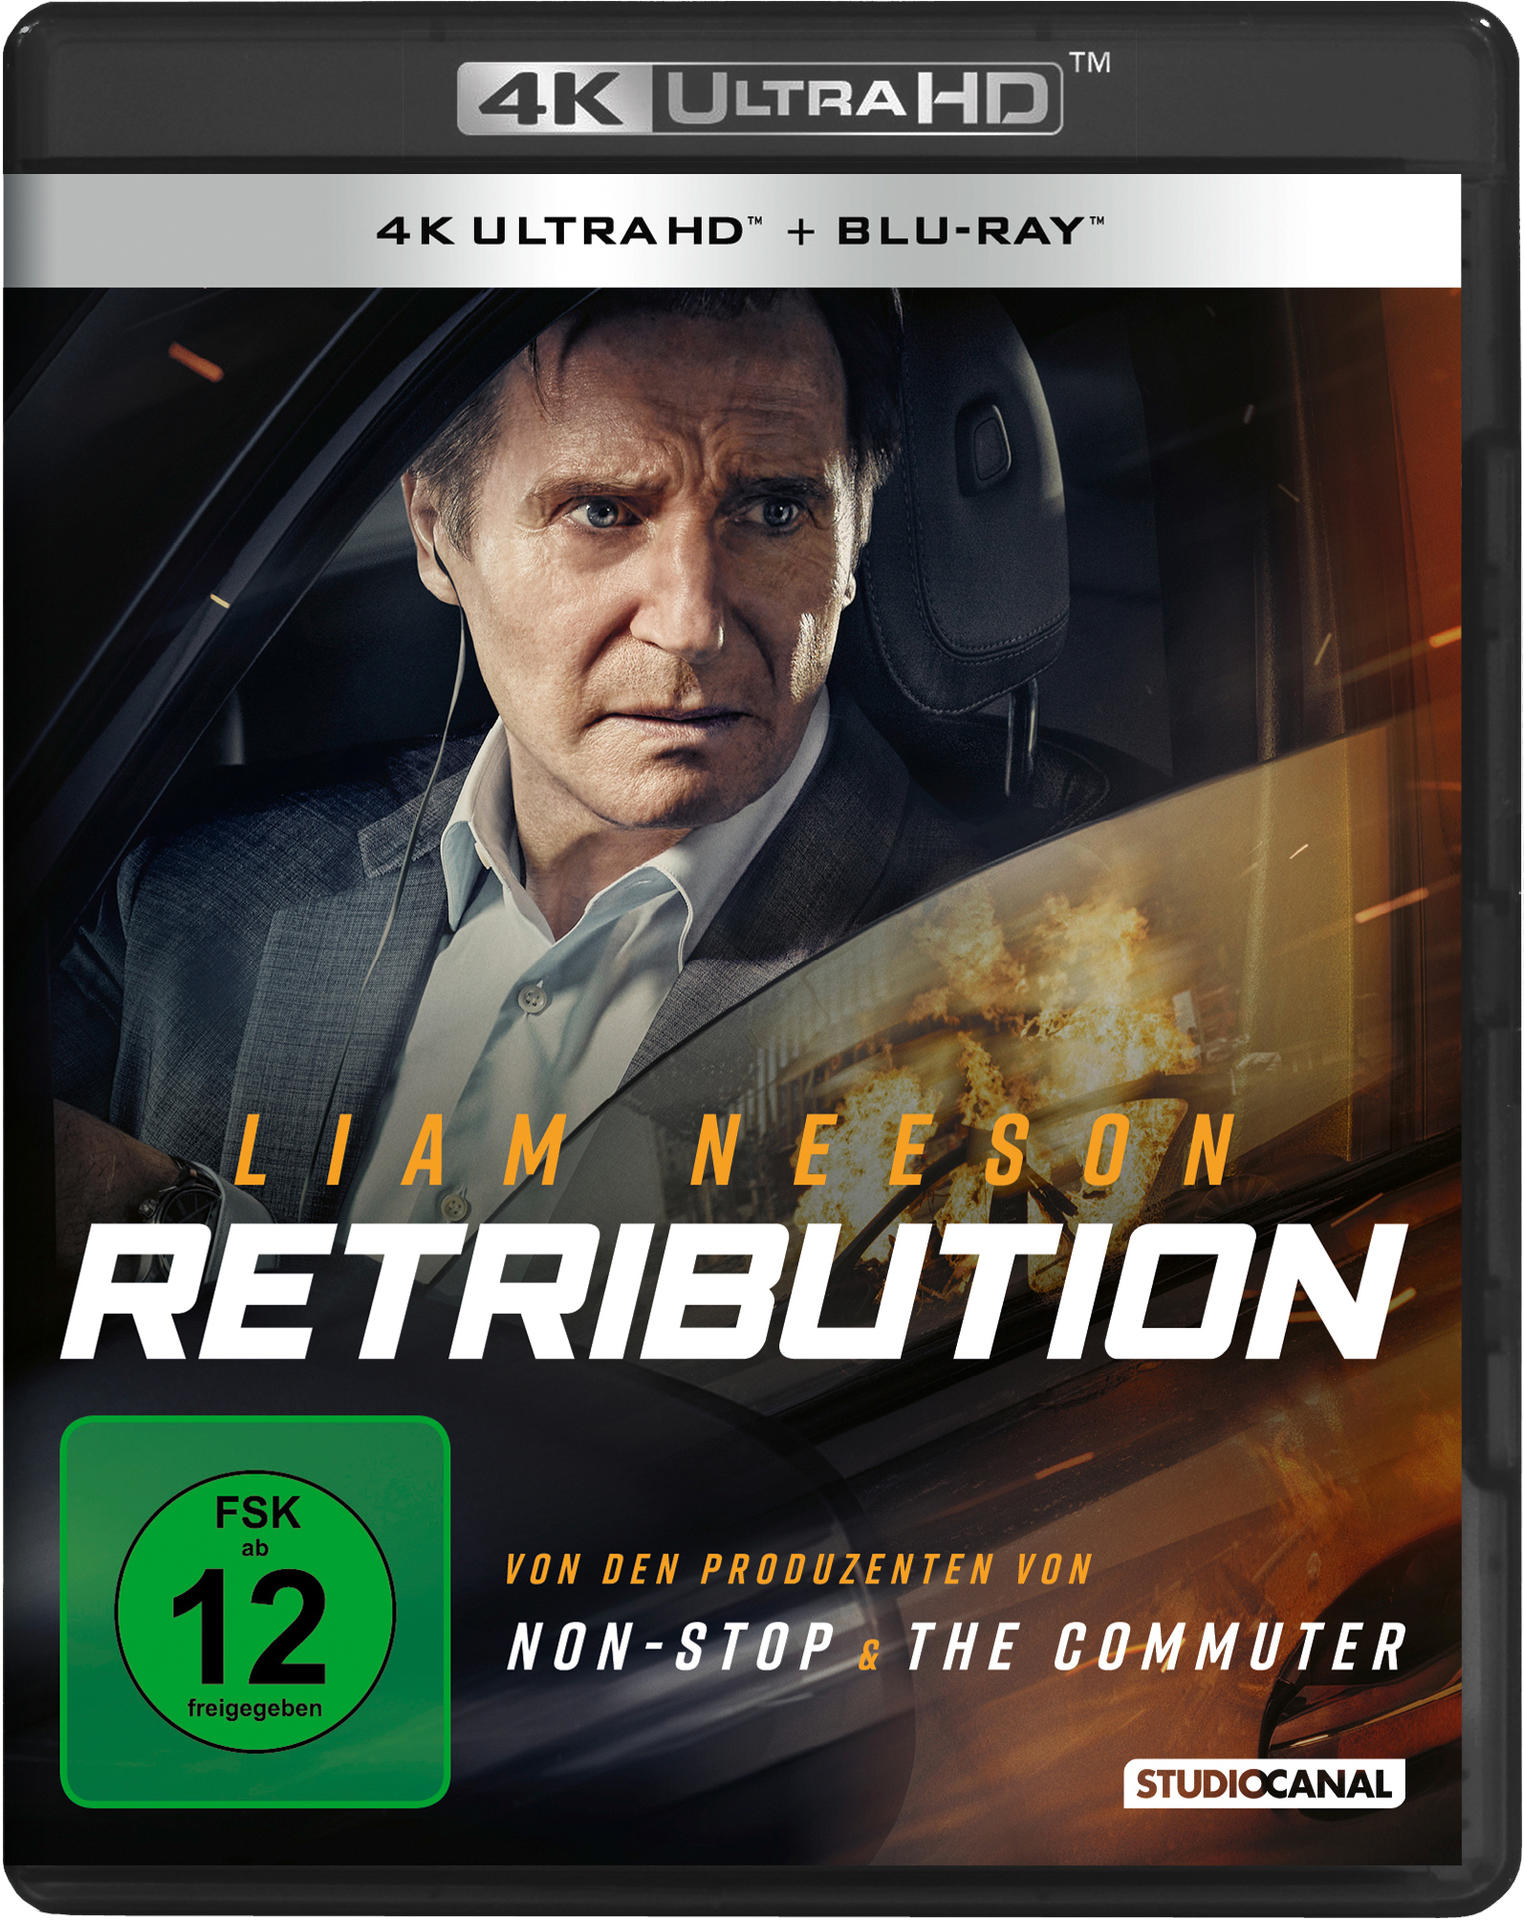 HD + Blu-ray 4K Retribution Blu-ray Ultra